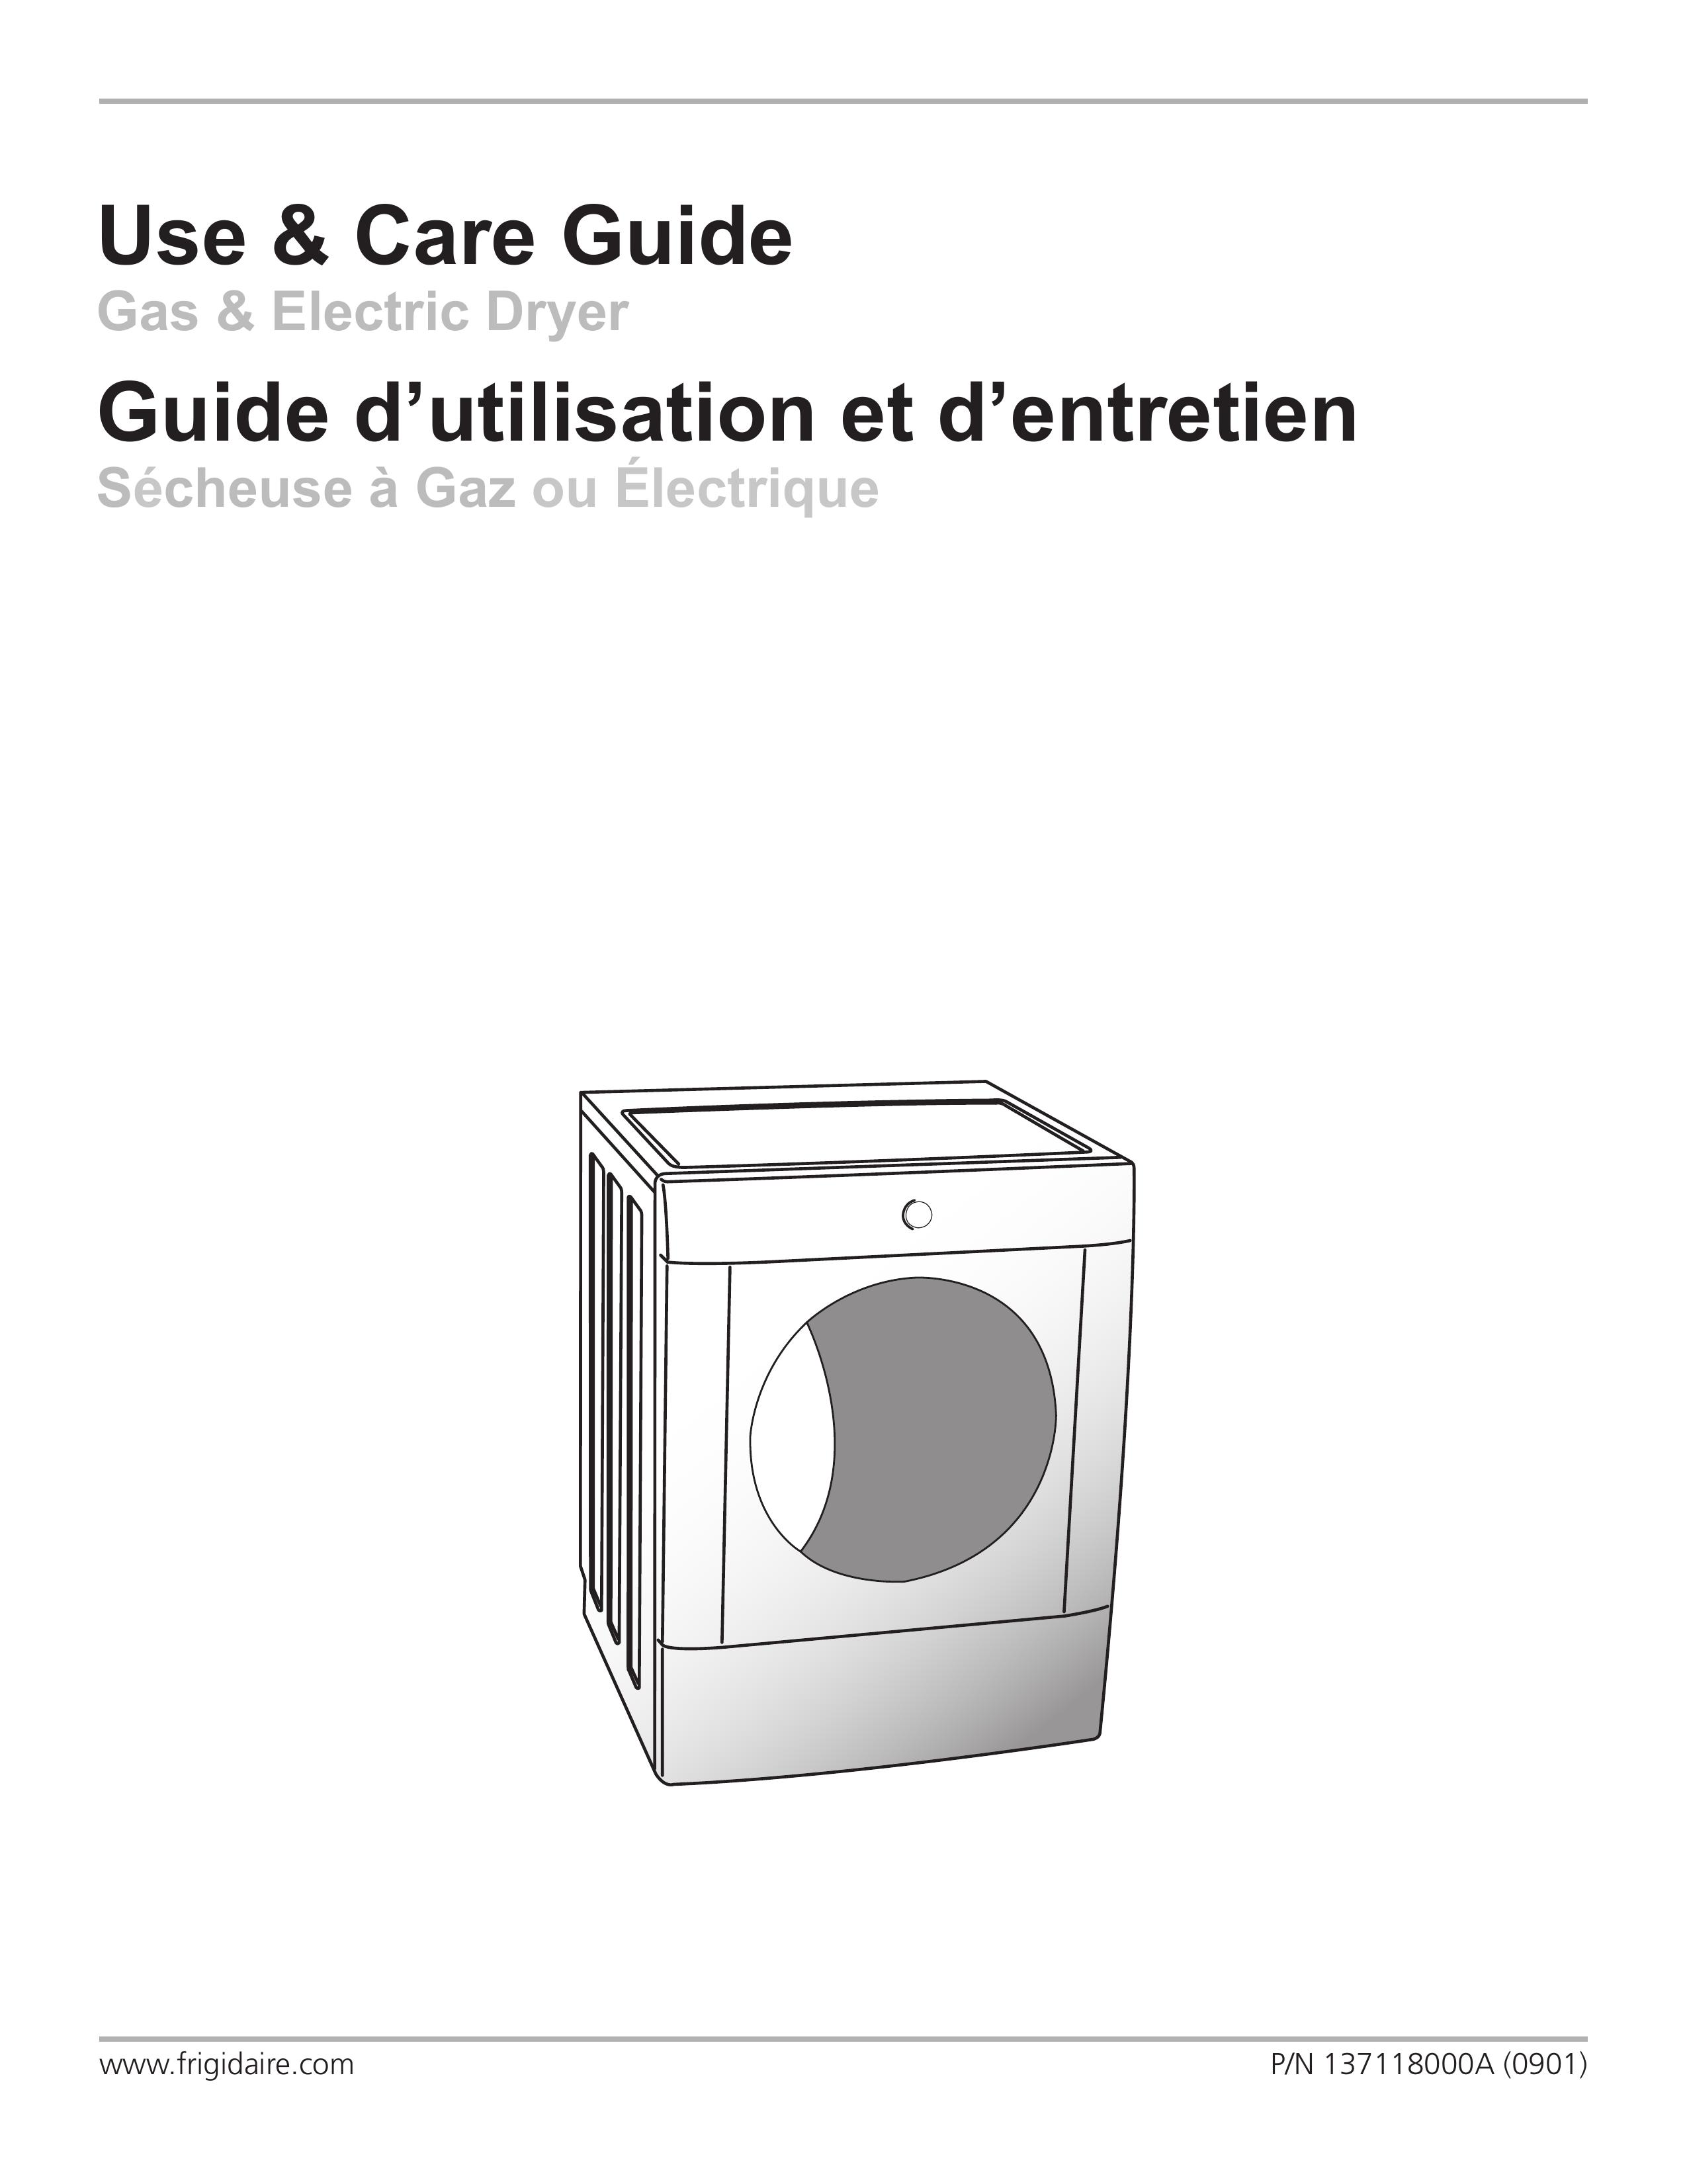 Frigidaire 137118000A Clothes Dryer User Manual